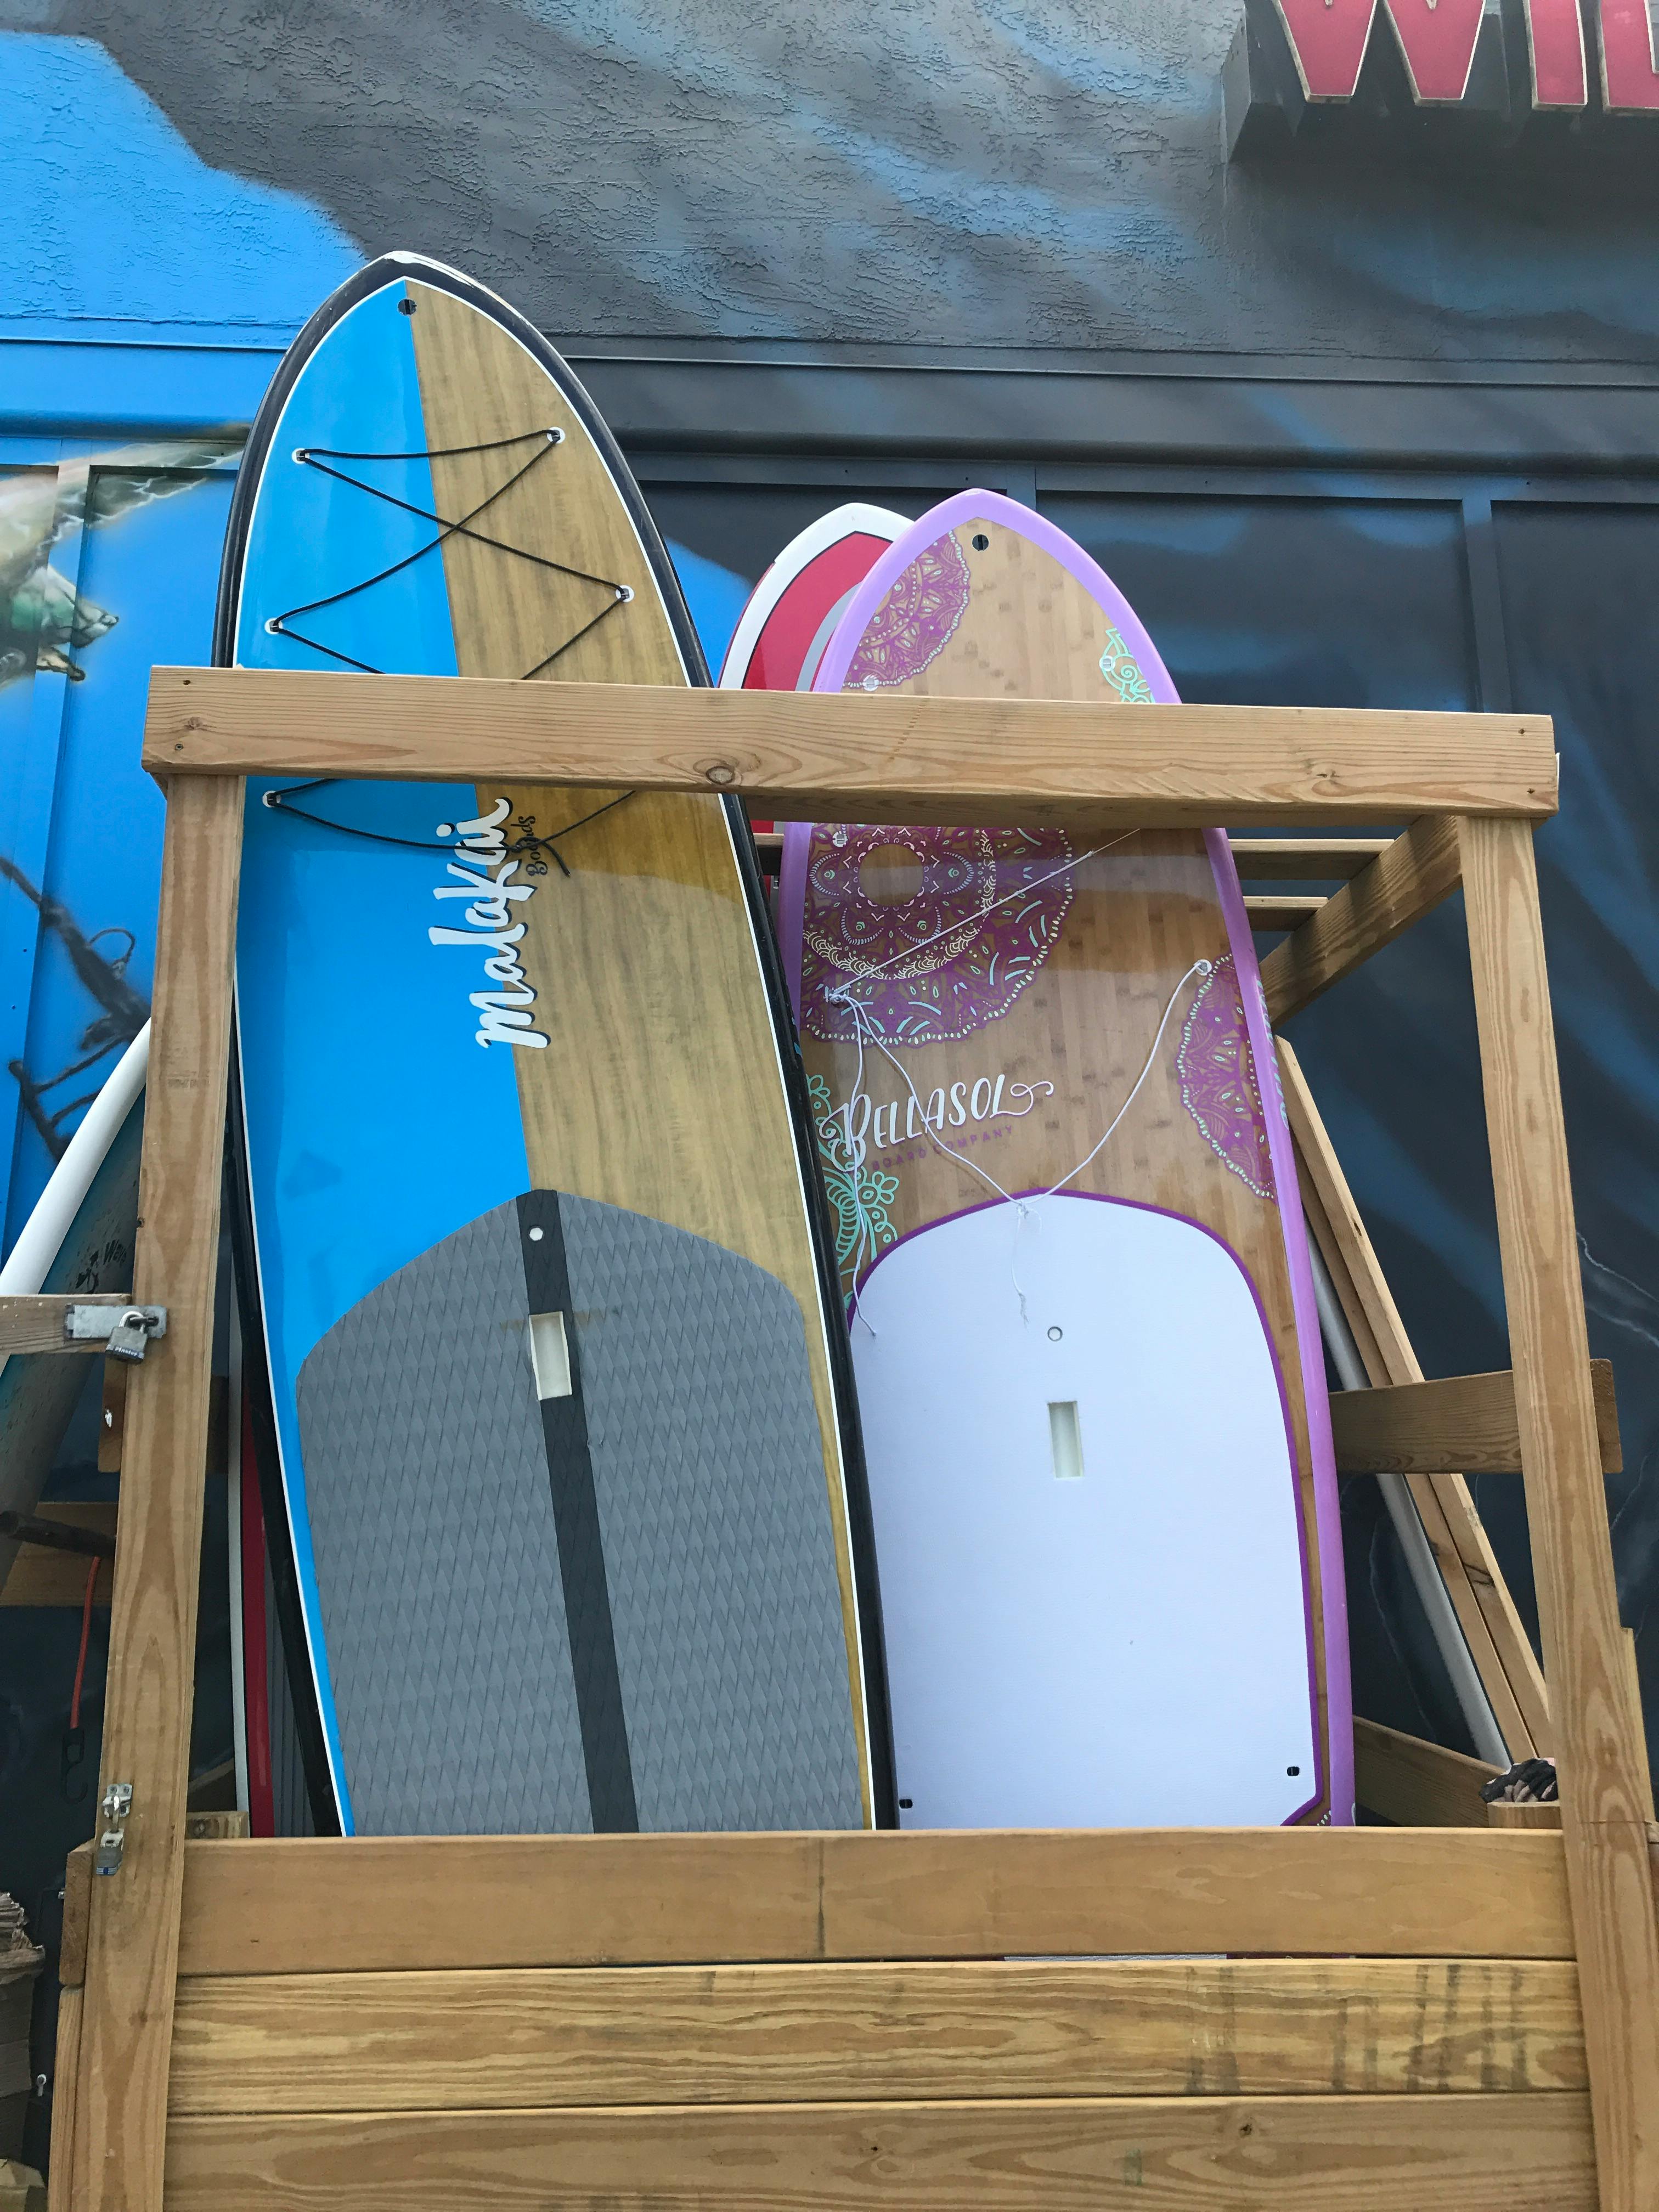 Free stock photo of surf up surfboards wood shelf surfshop nsb florida